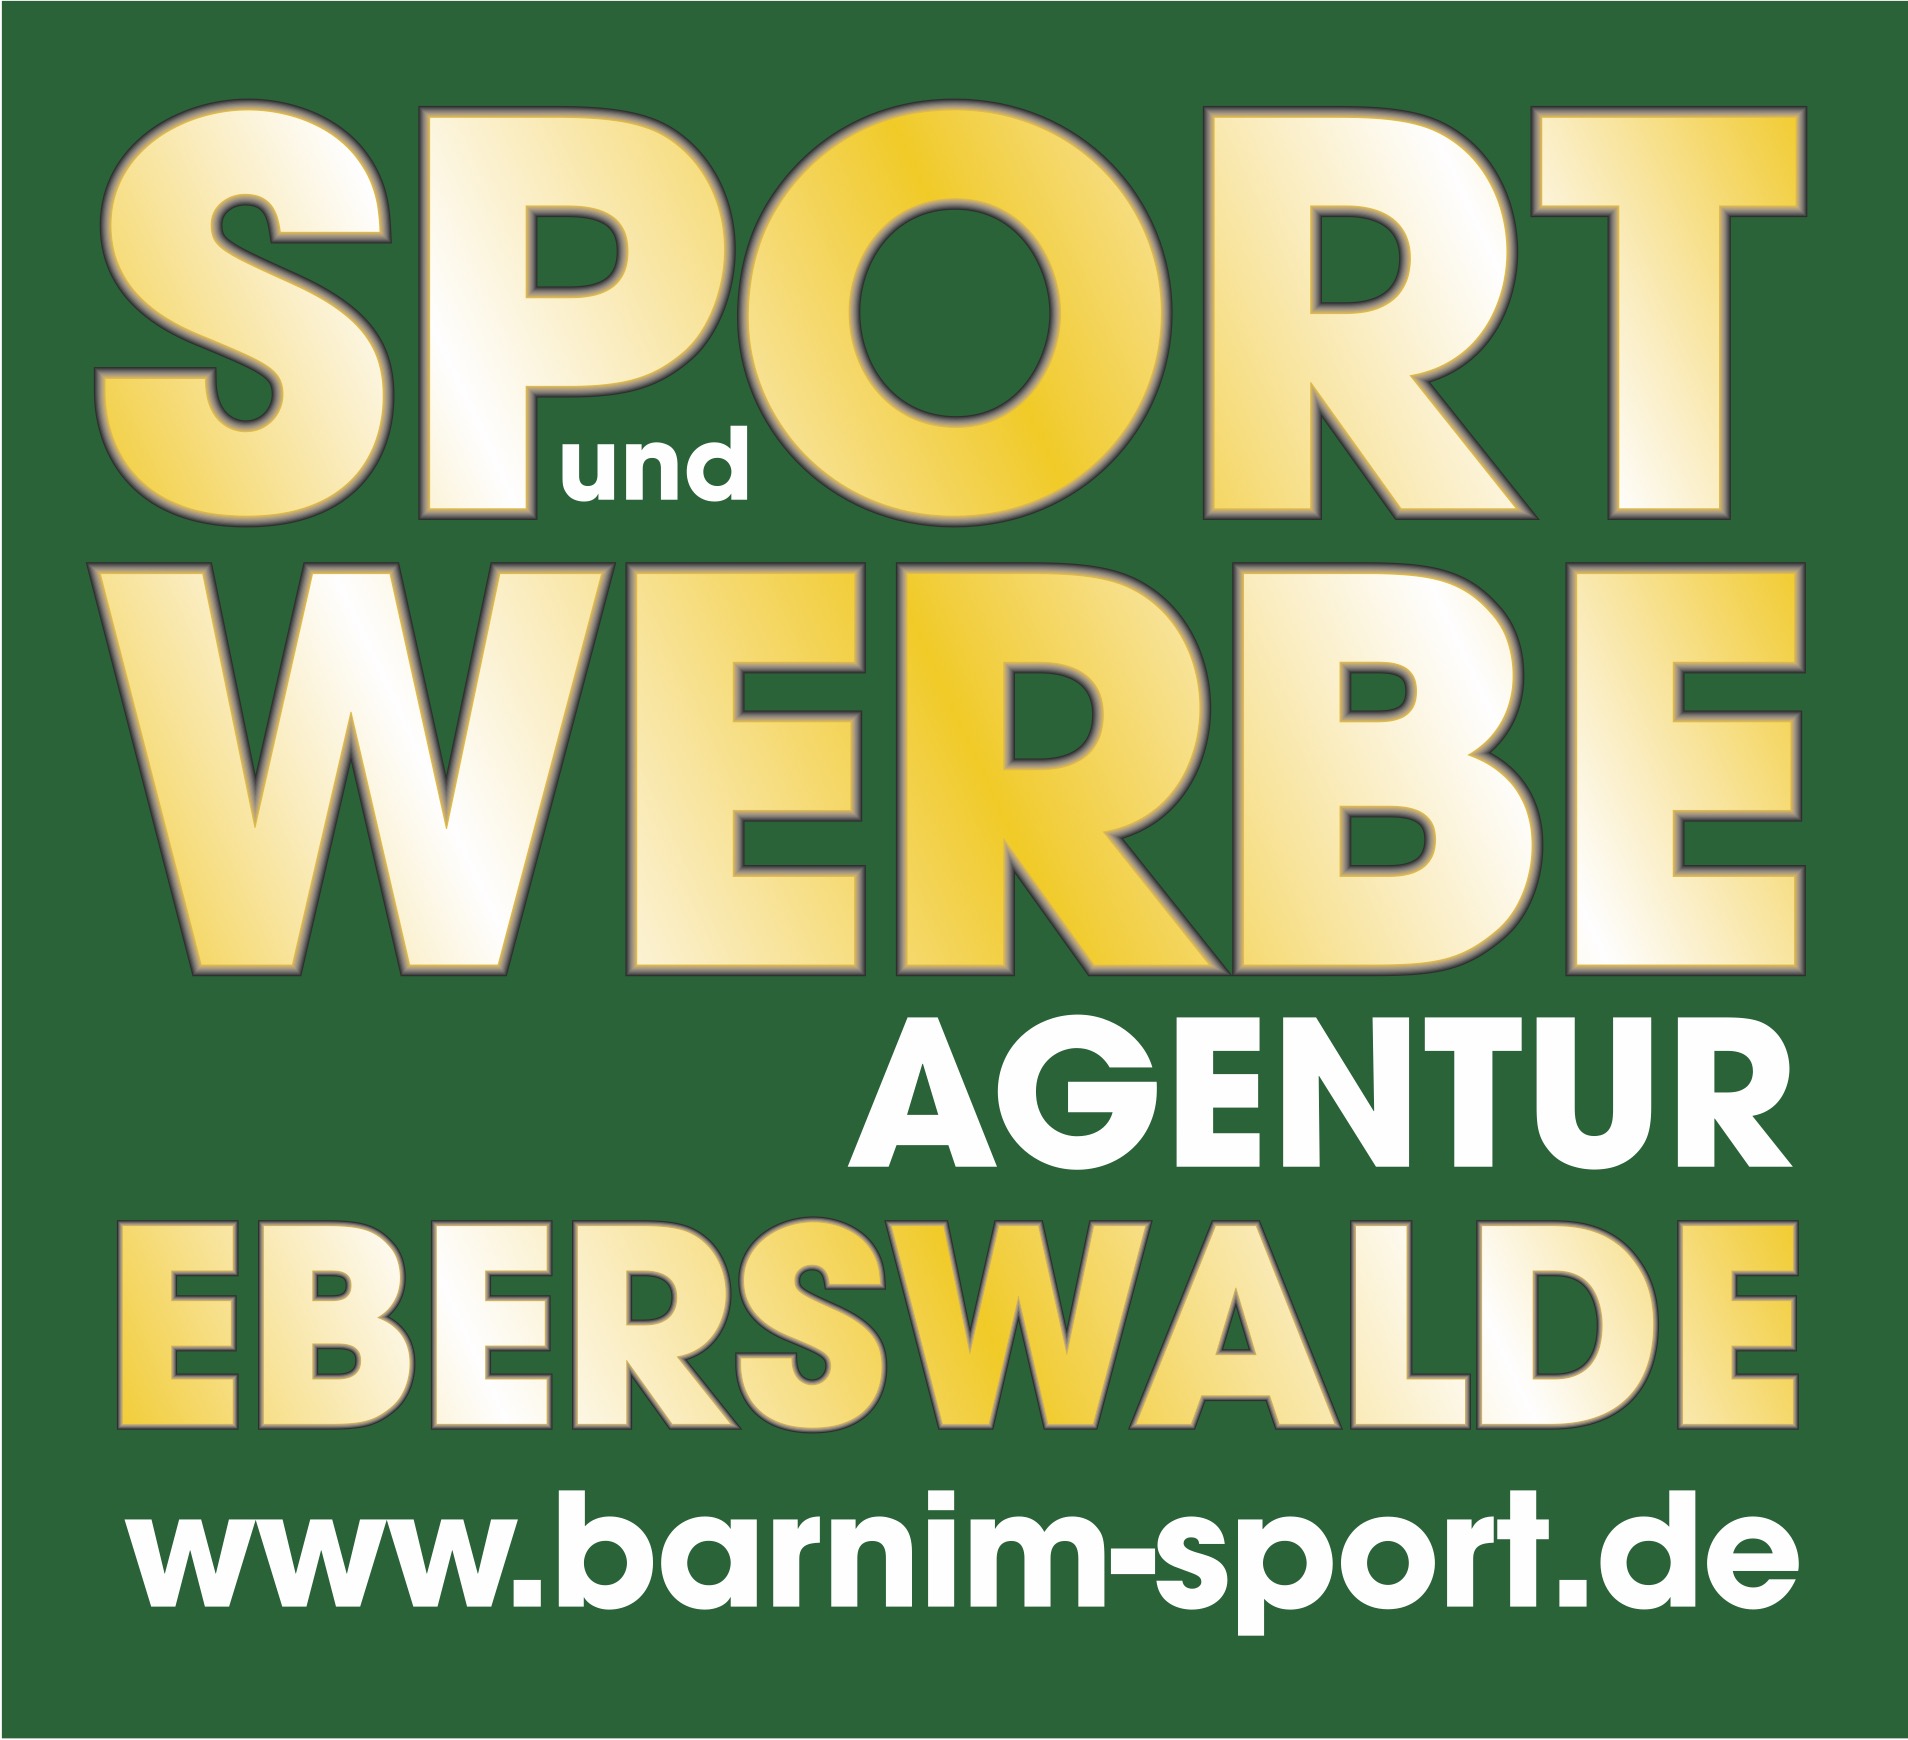 (c) Barnim-sport.de